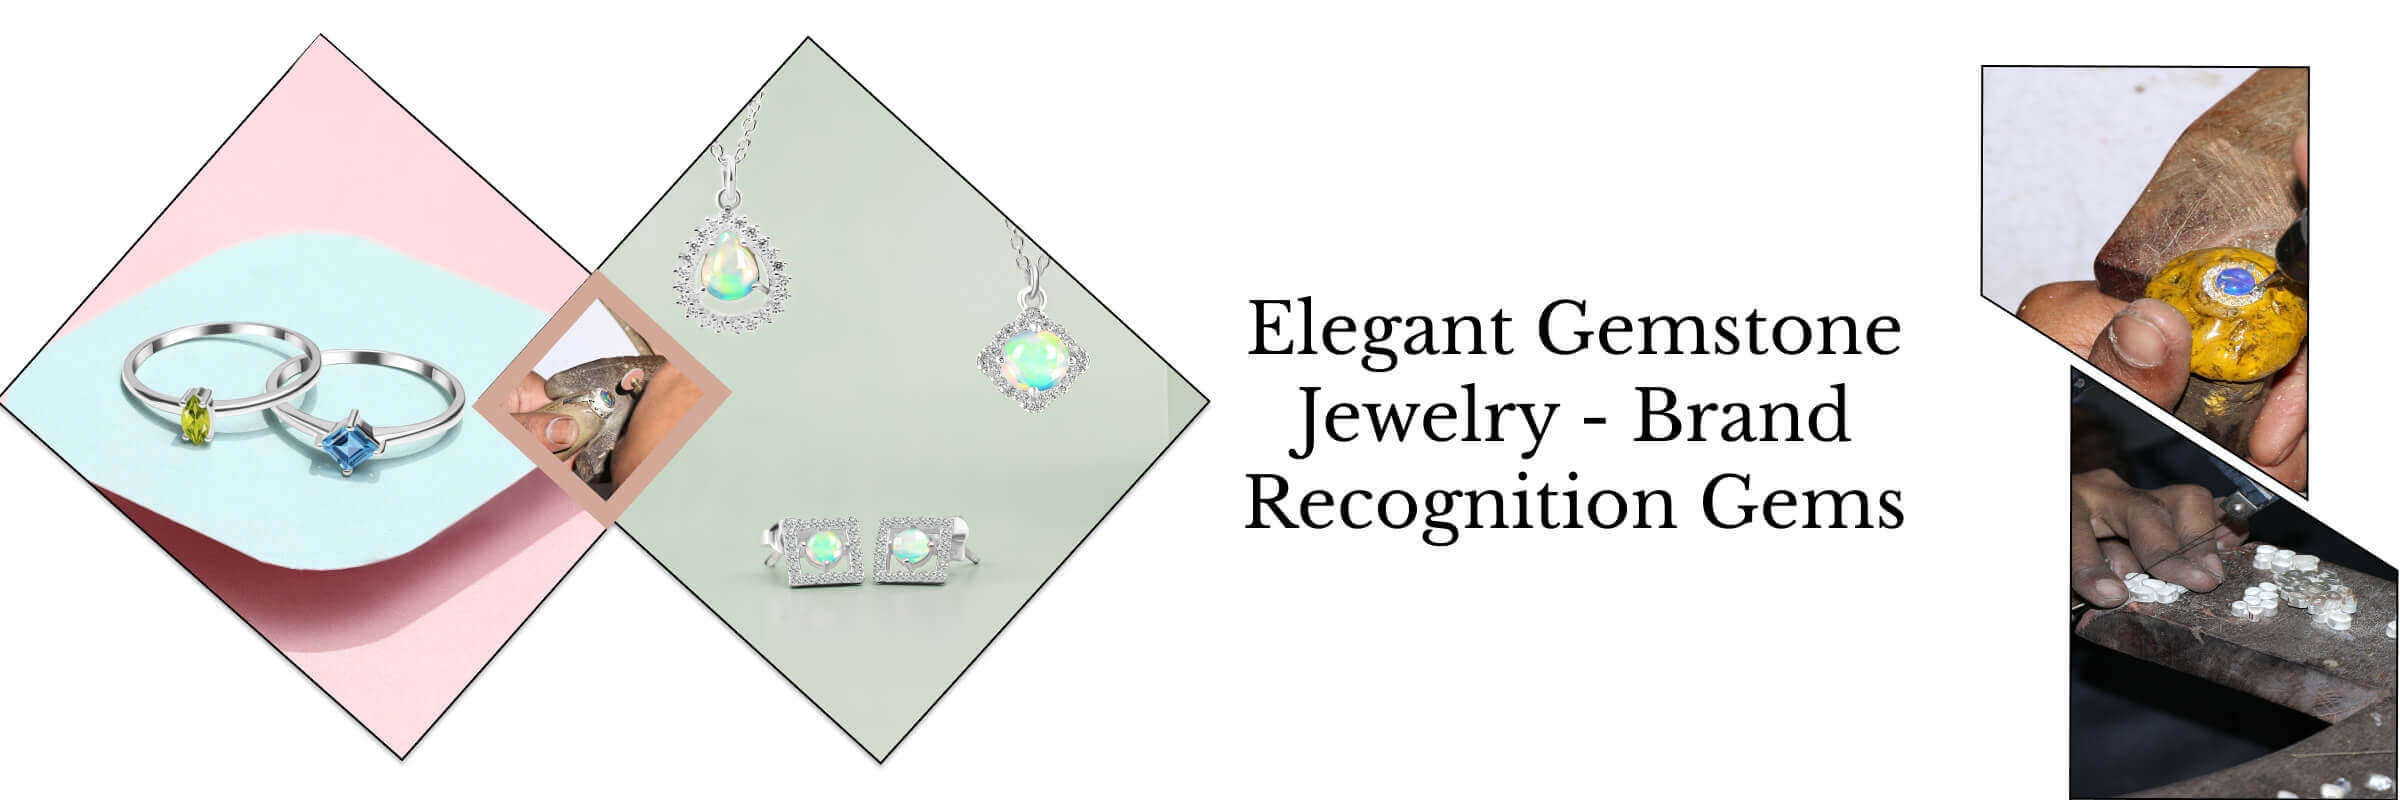 Custom Gemstone Jewelry